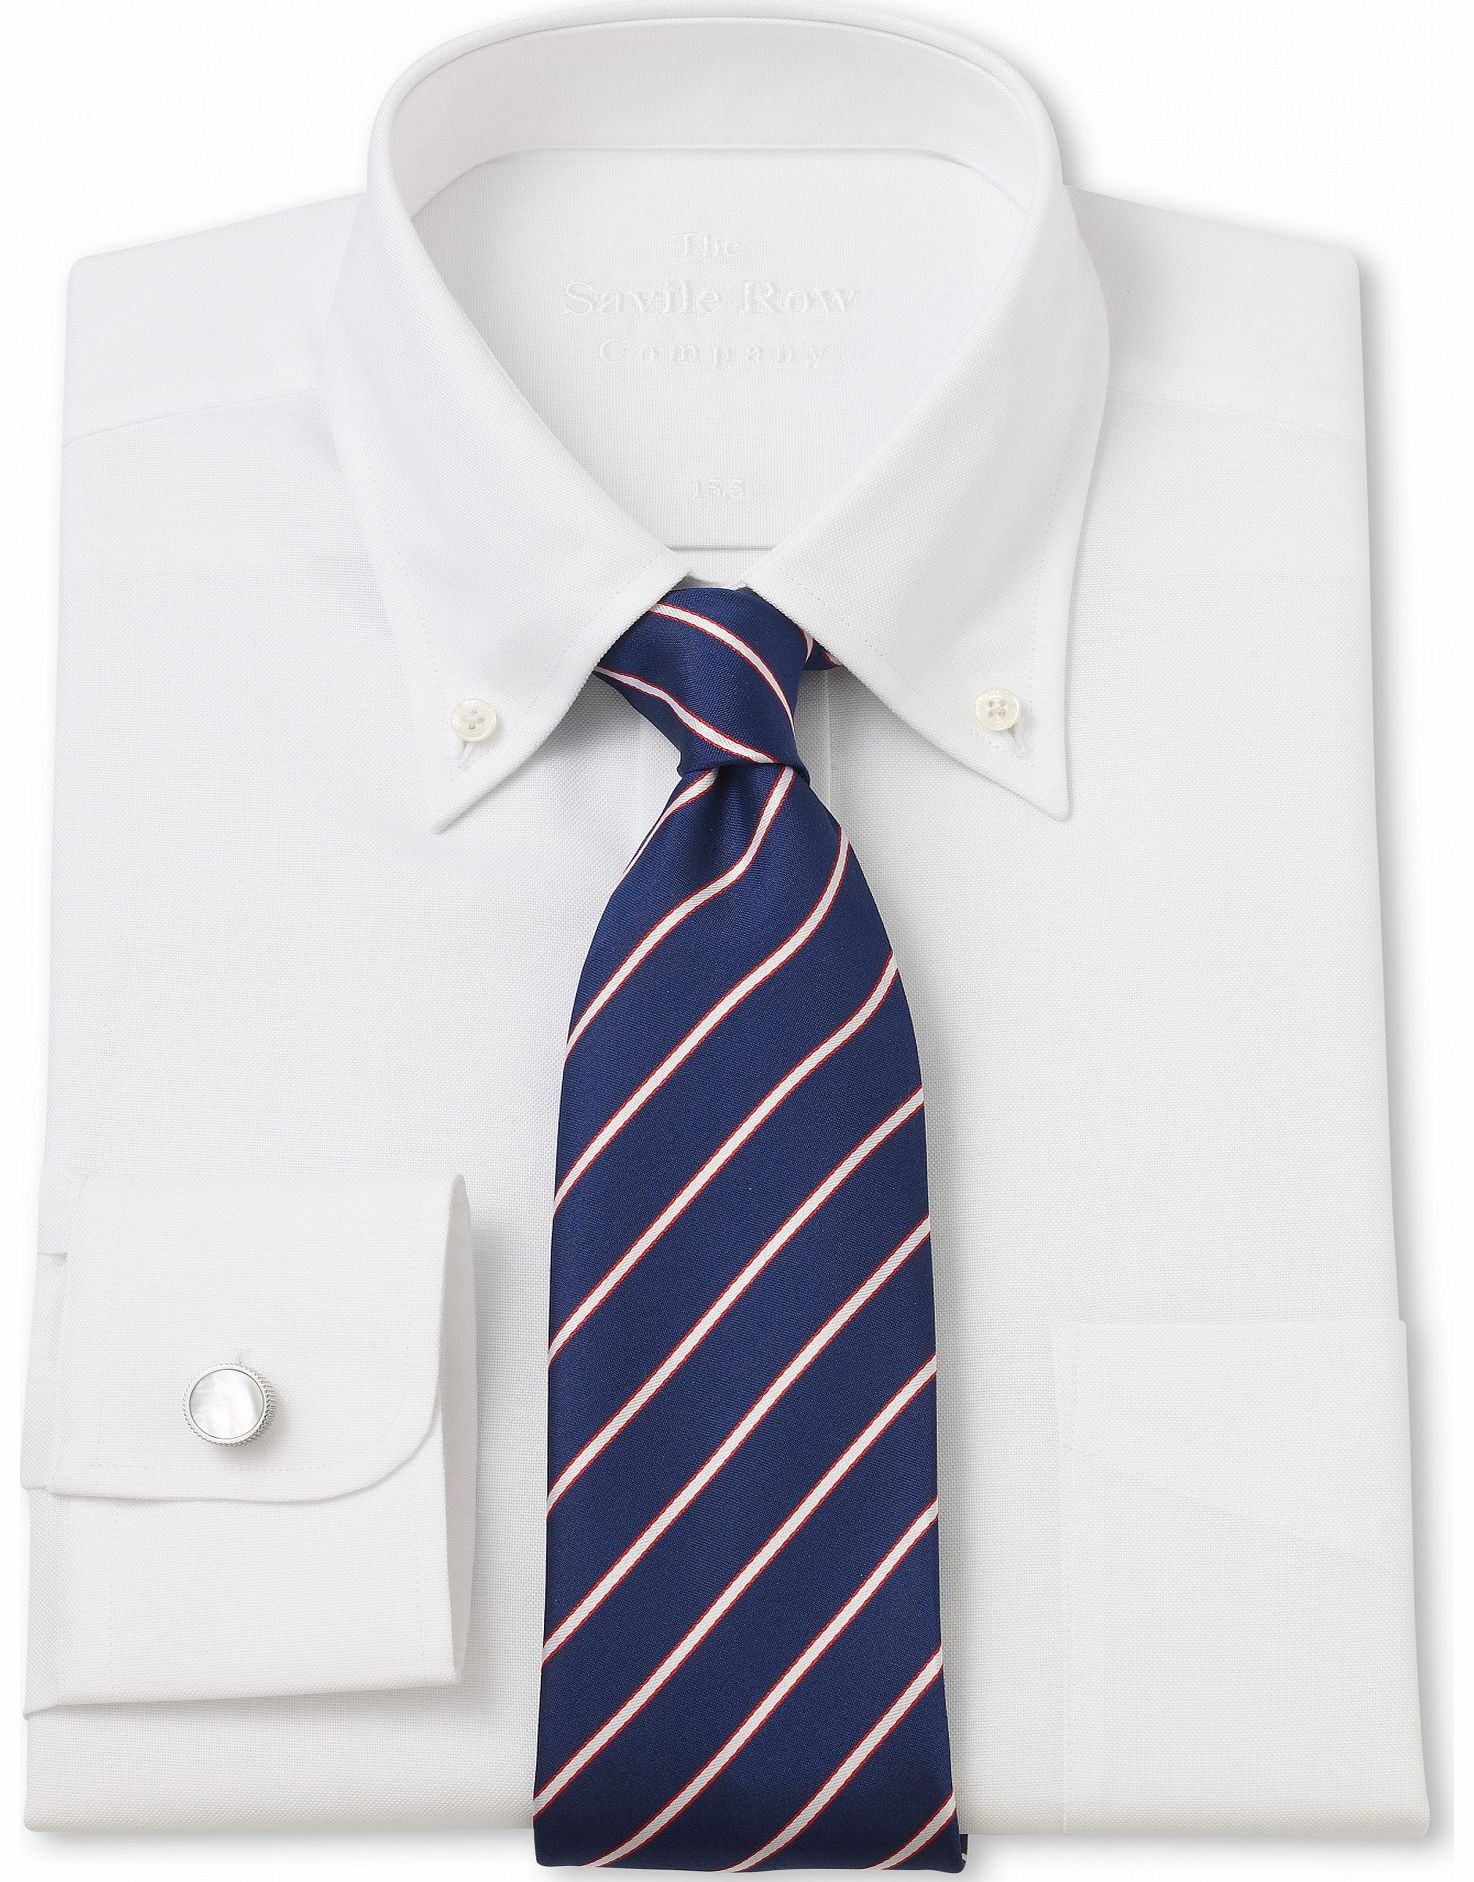 Savile Row Company White Oxford Button Down Classic Shirt 19 1/2``